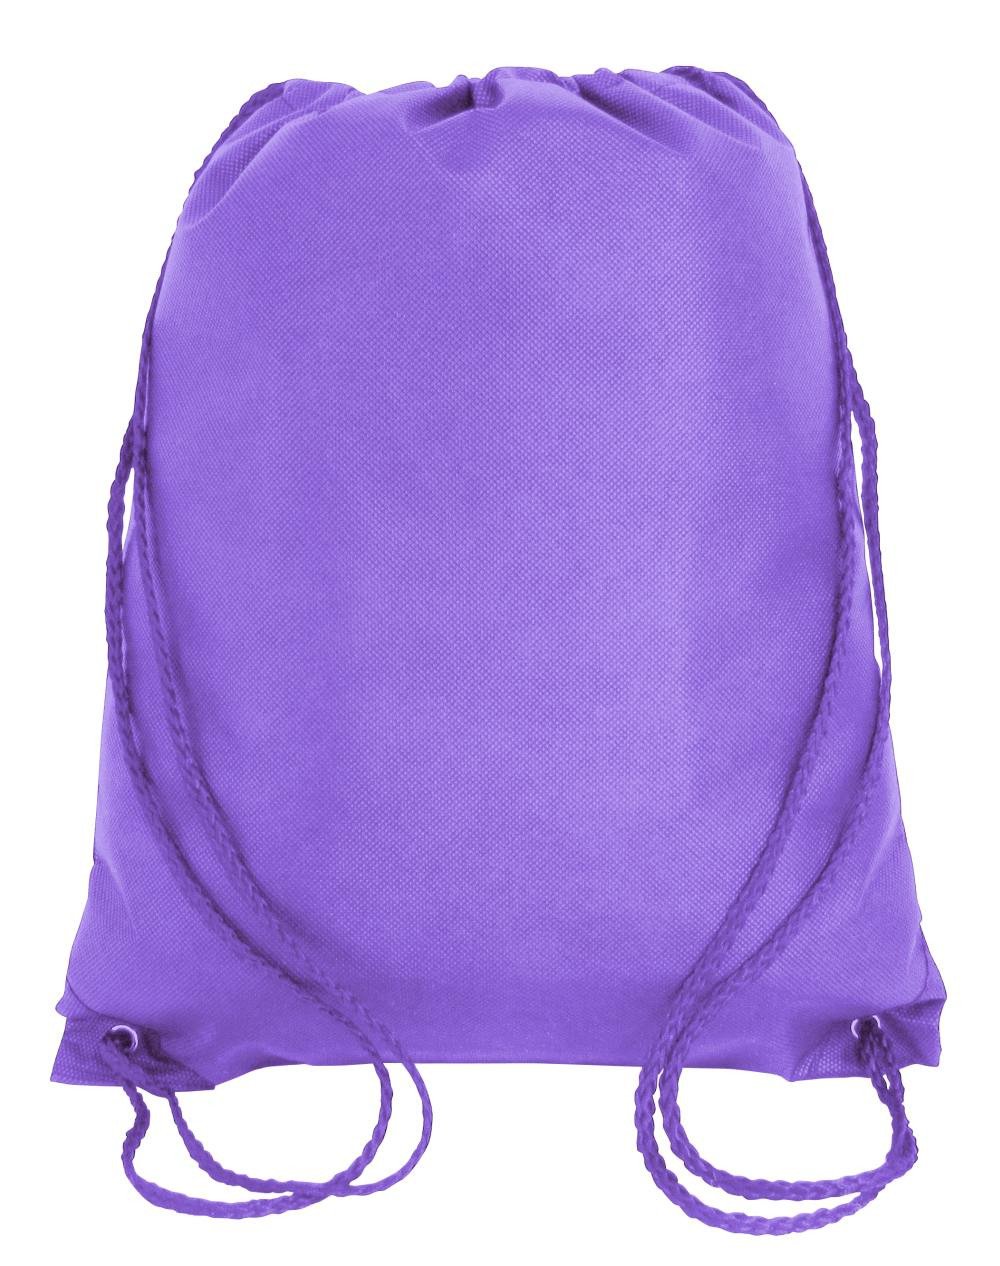 Budget Drawstring Bag Small Size Purple